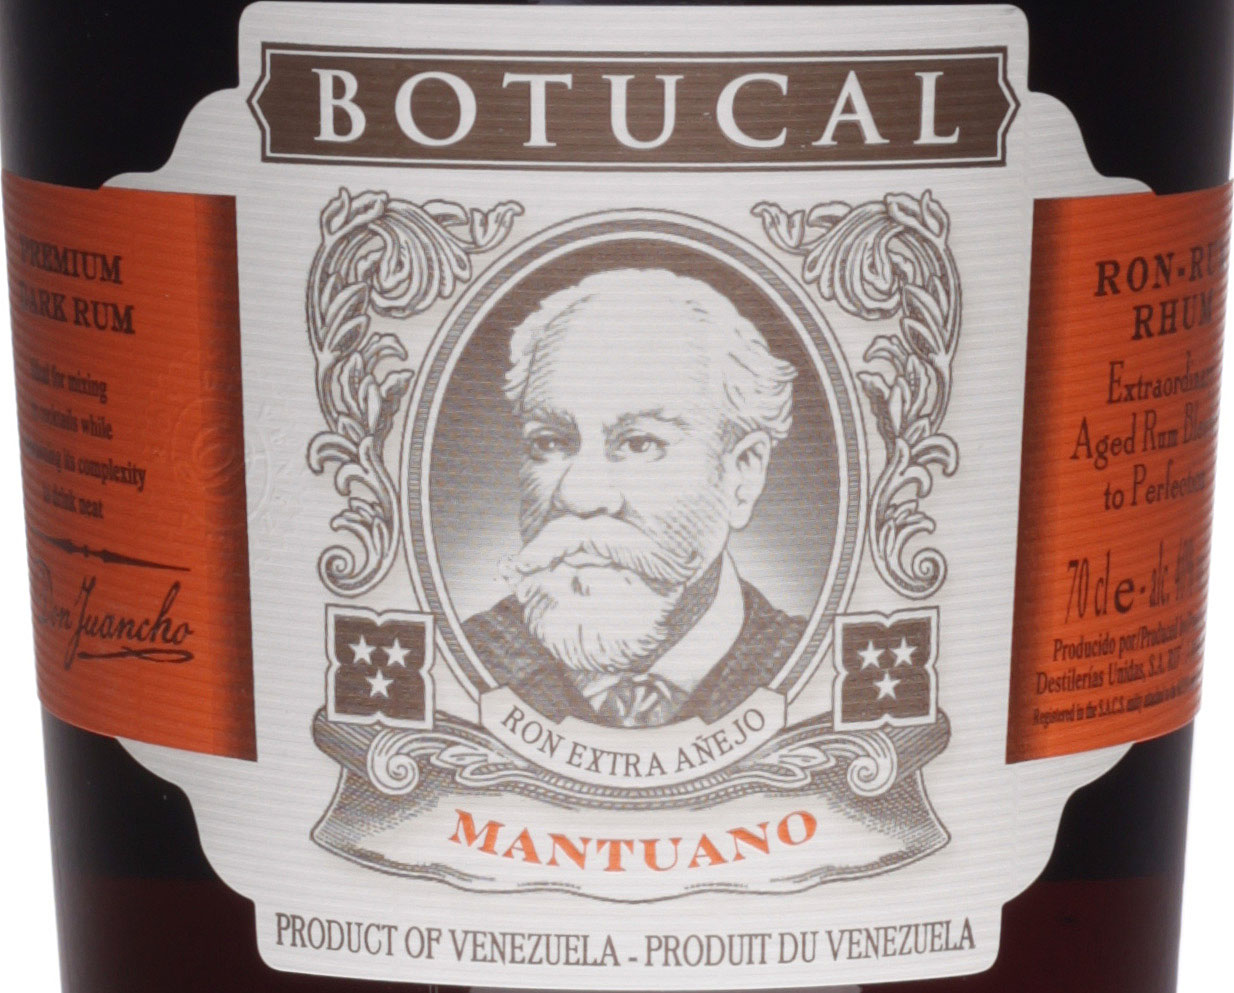 % 40 Liter 0,7 Tumbler Geschenkset mit Botucal Mantuano